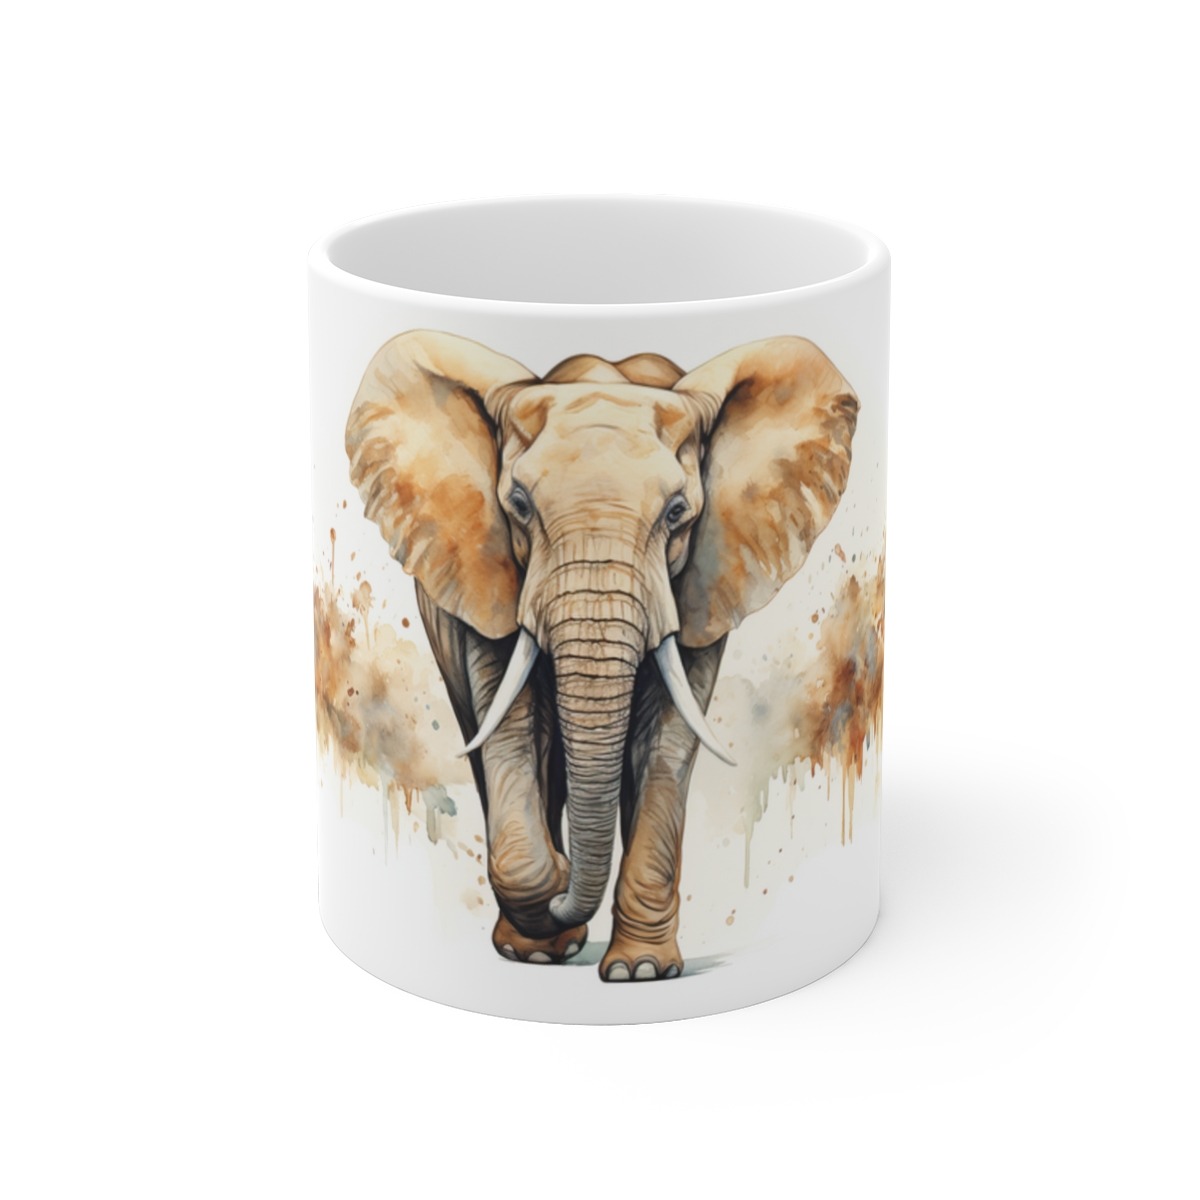 Weißes Keramikgeschirr - Elefant in Aquarellstil